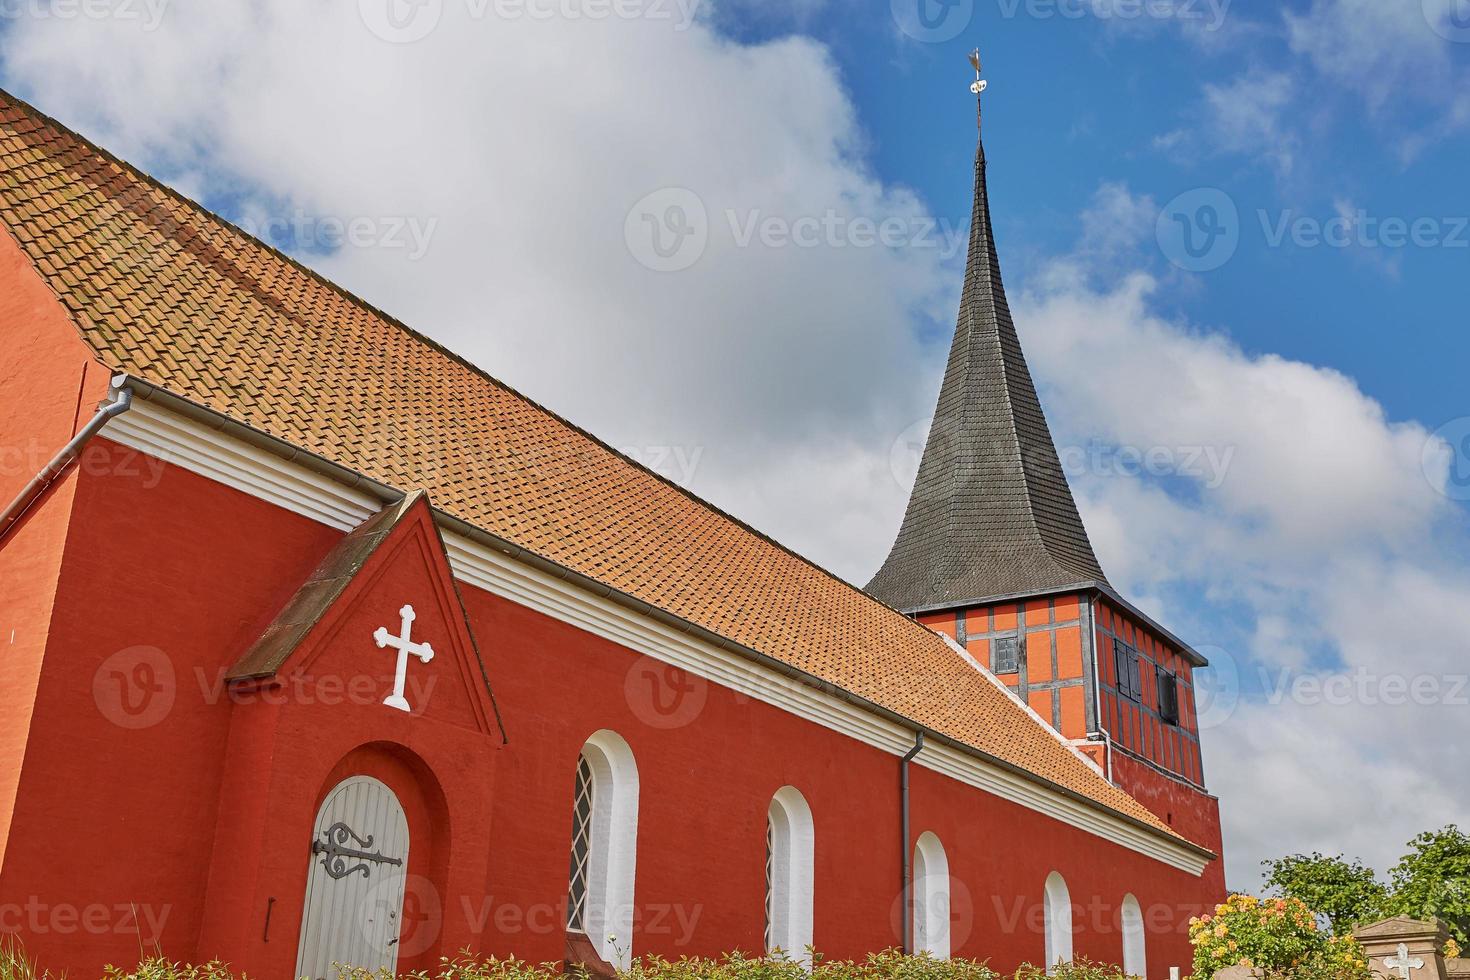 vista da igreja svaneke na ilha de bornholm, na dinamarca foto